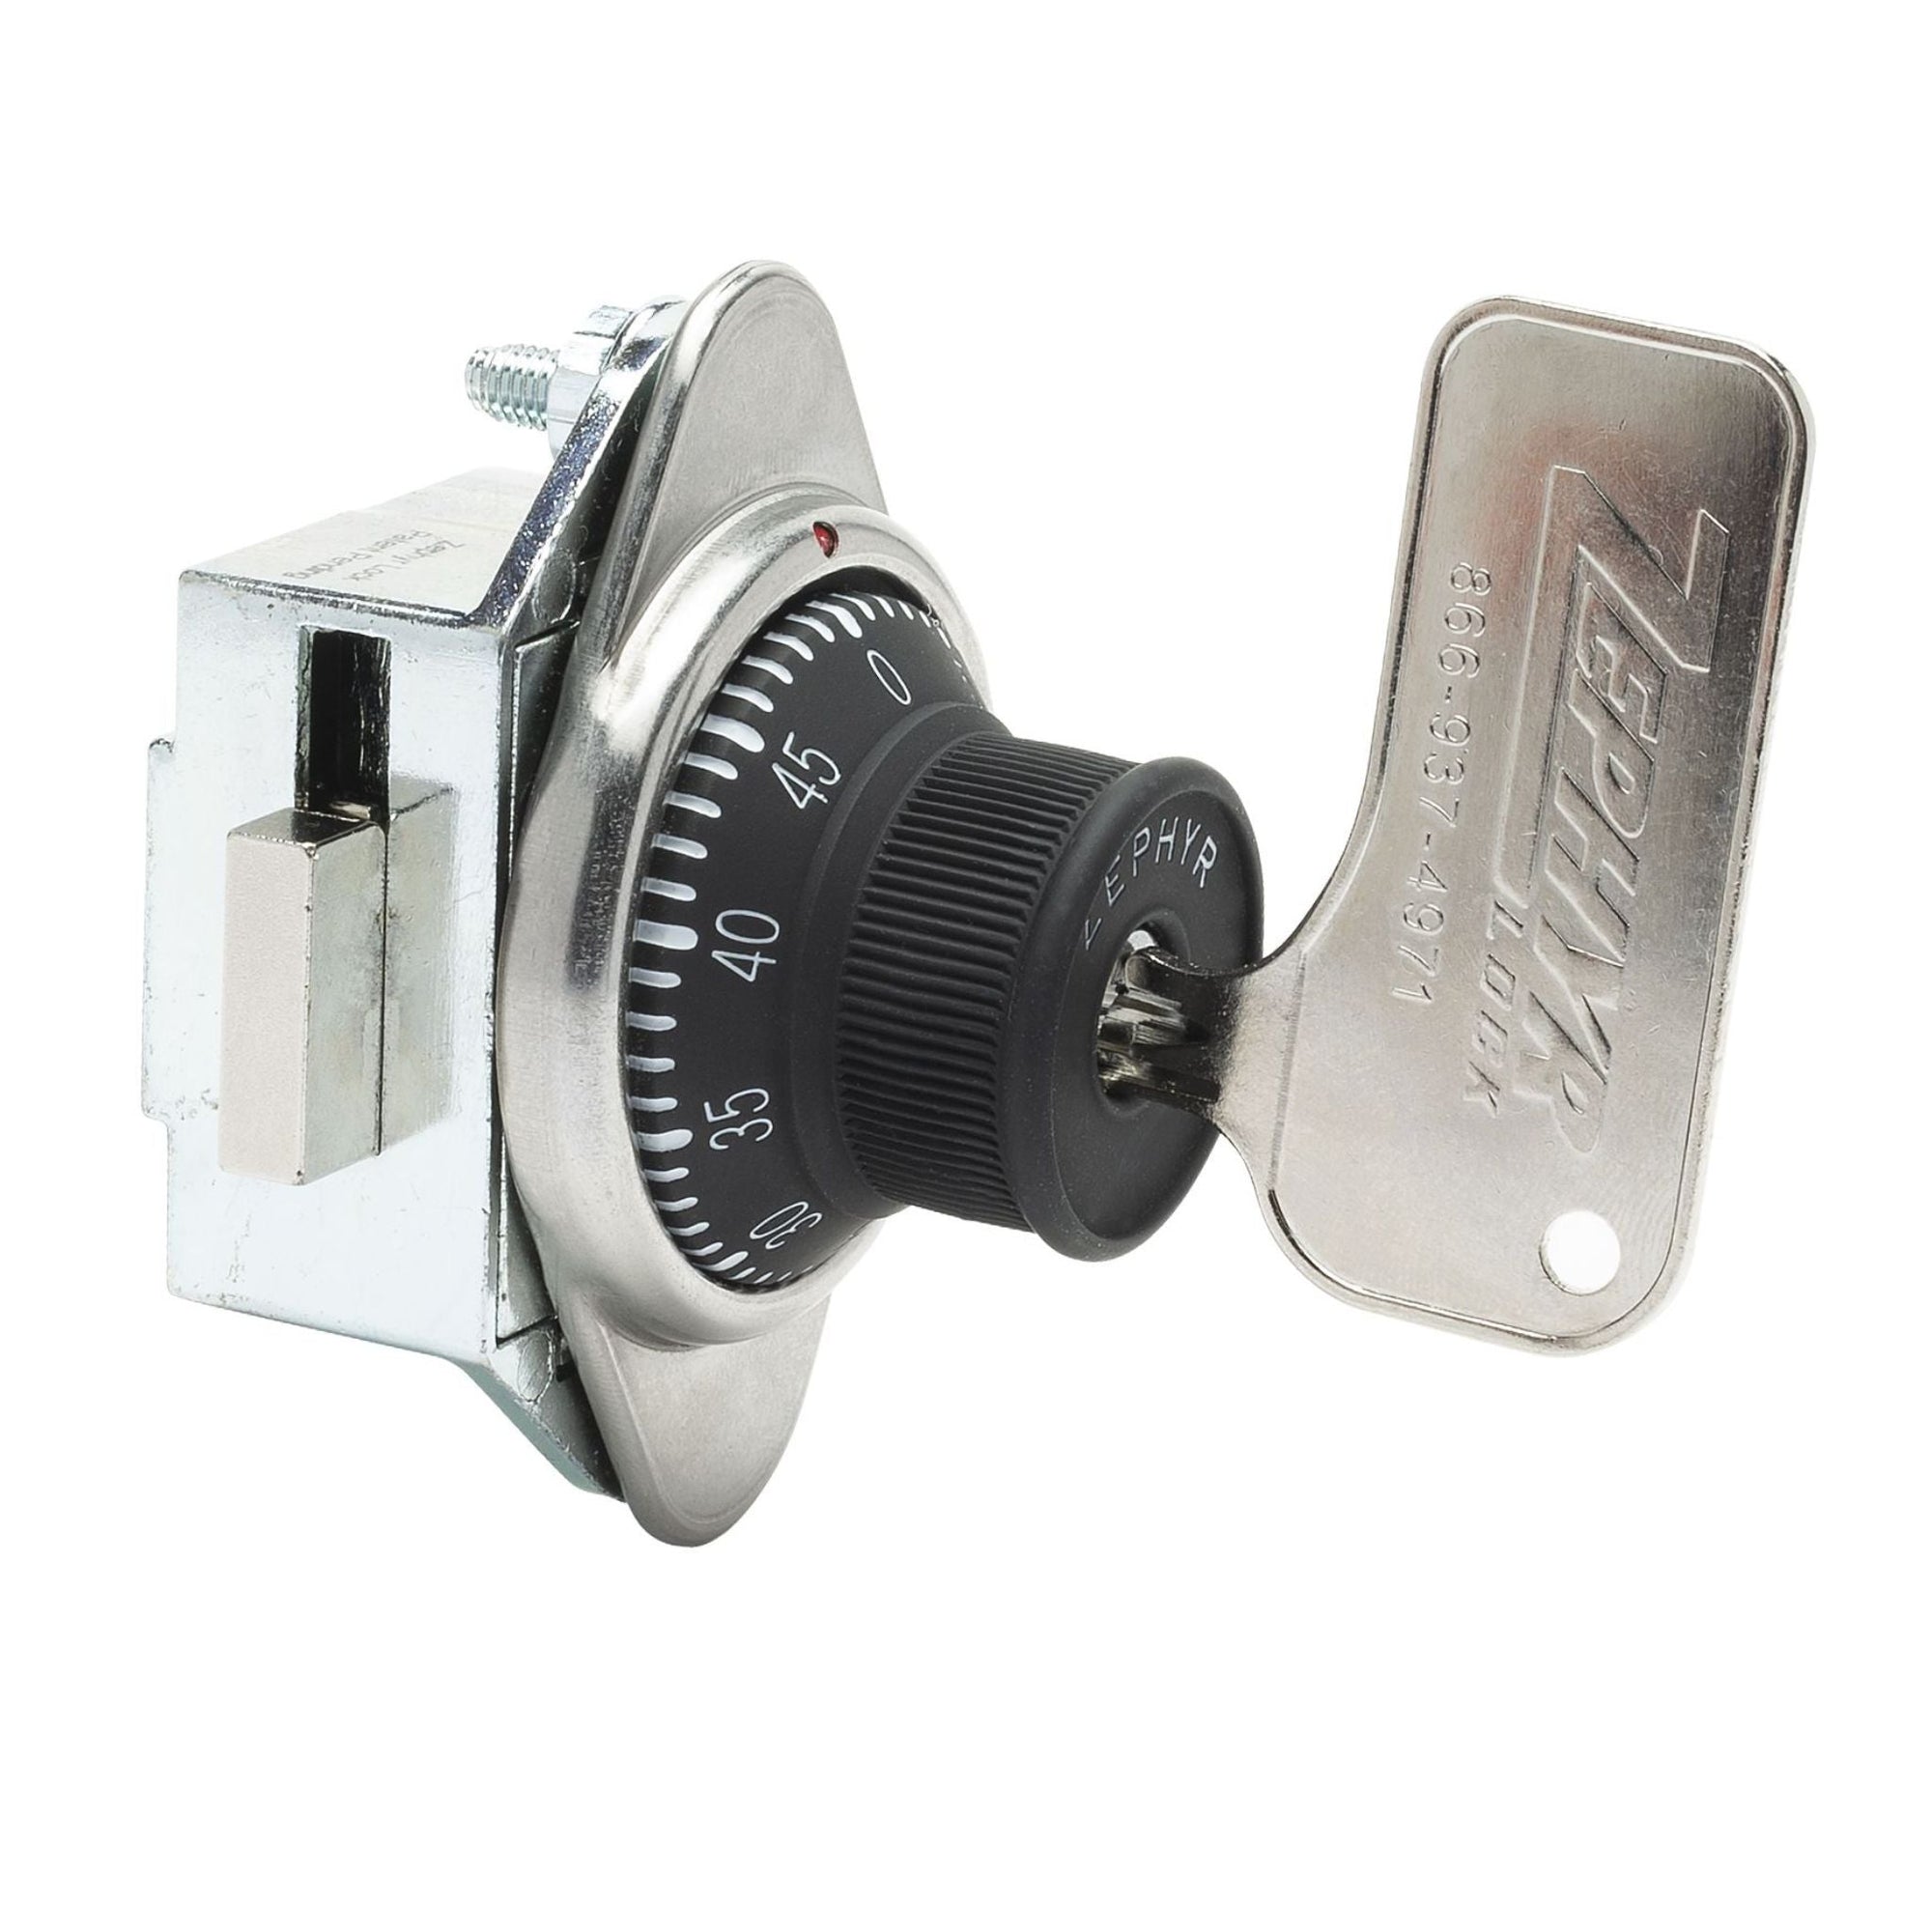 Zephyr Lock 1930ADA RH Combination Locker Padlock ADA Compliant Lock Fits Gravity and Multi Point Lockers - The Lock Source